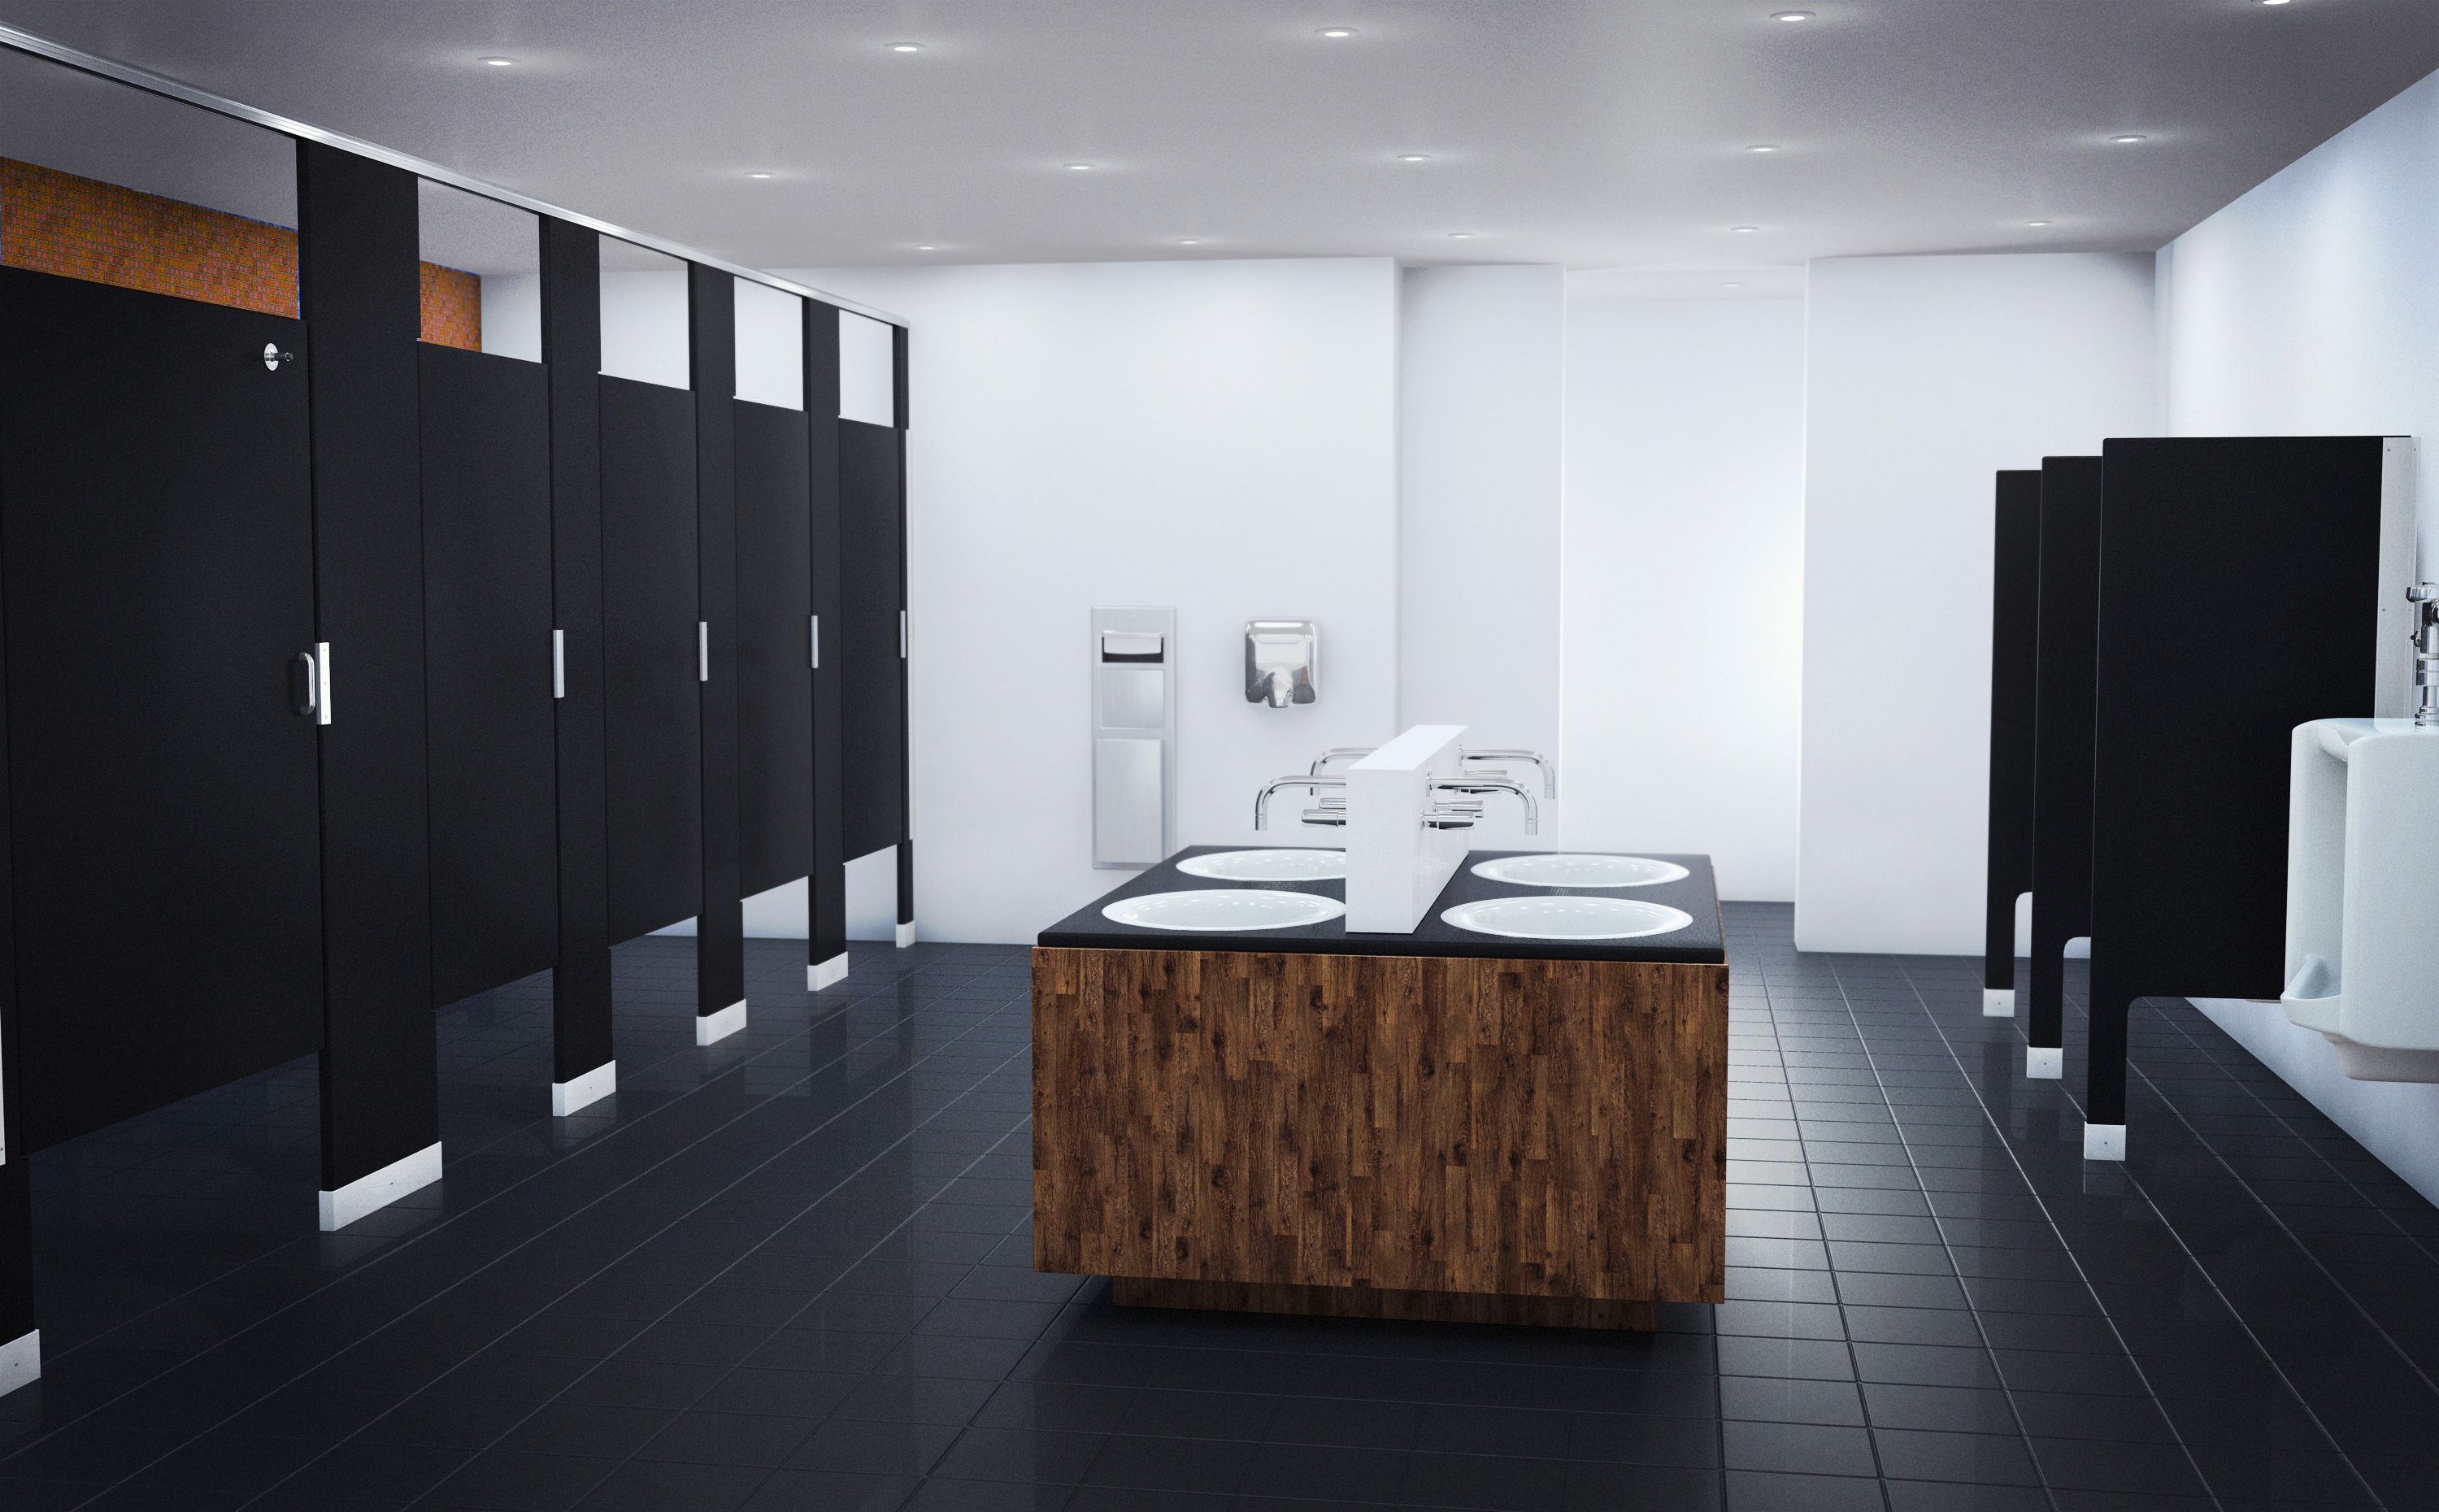 New Trends in Commercial Restroom Design